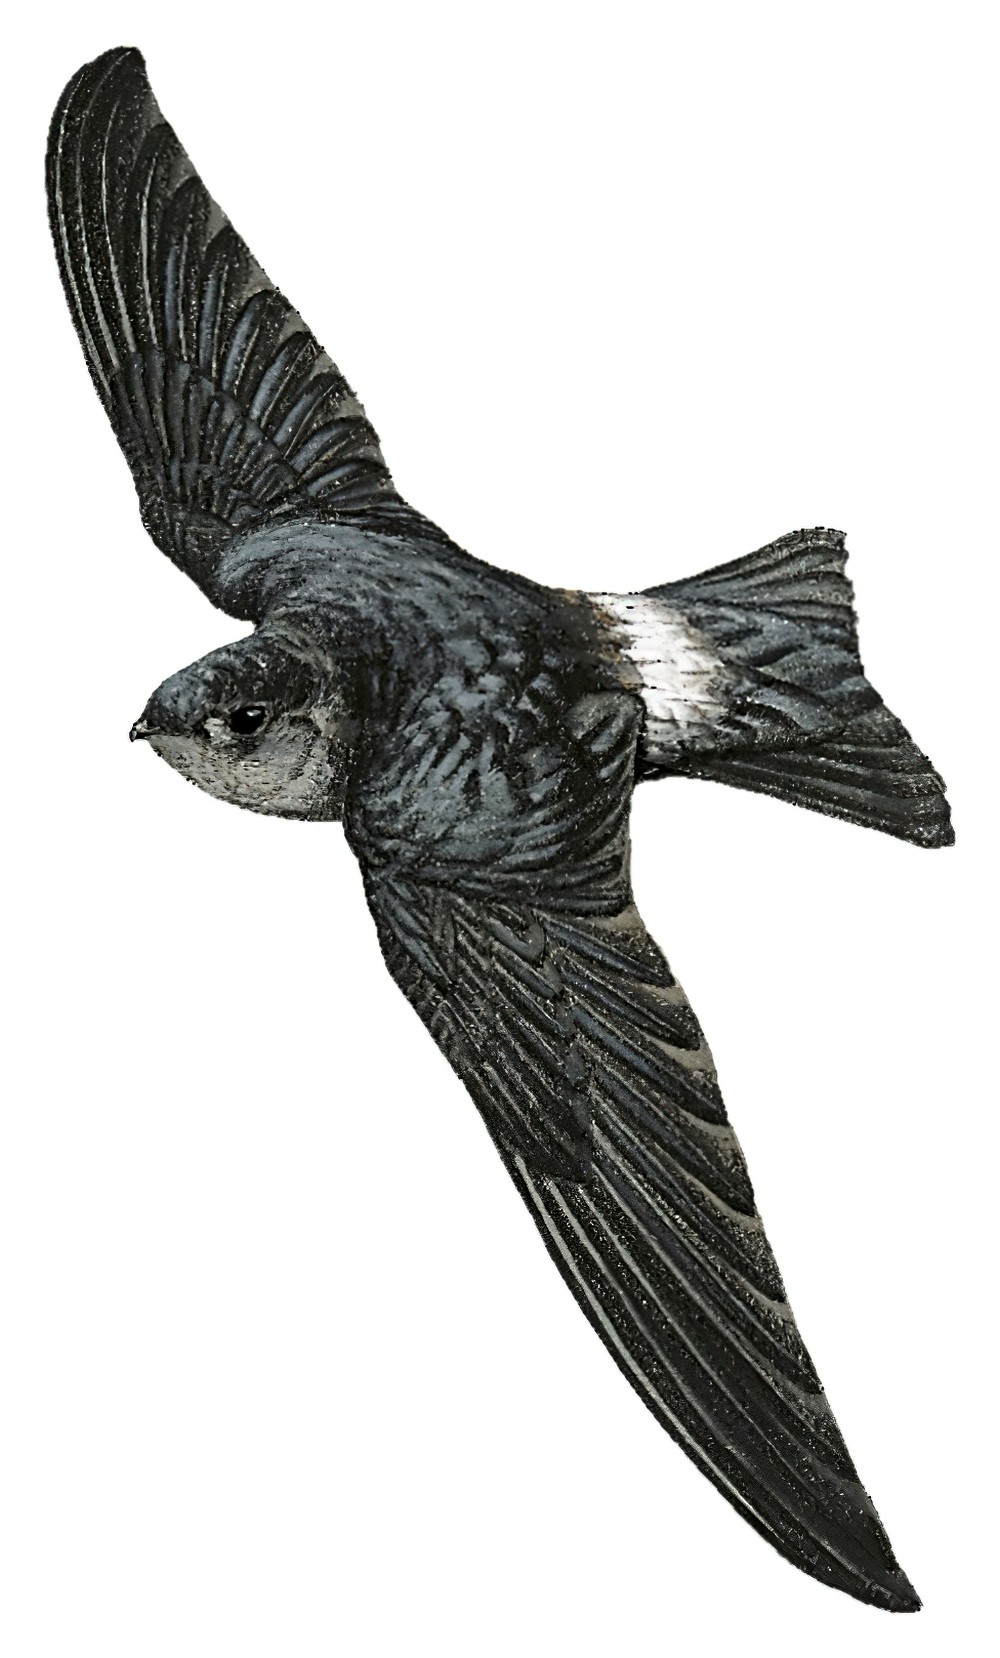 Seram Swiftlet / Aerodramus ceramensis